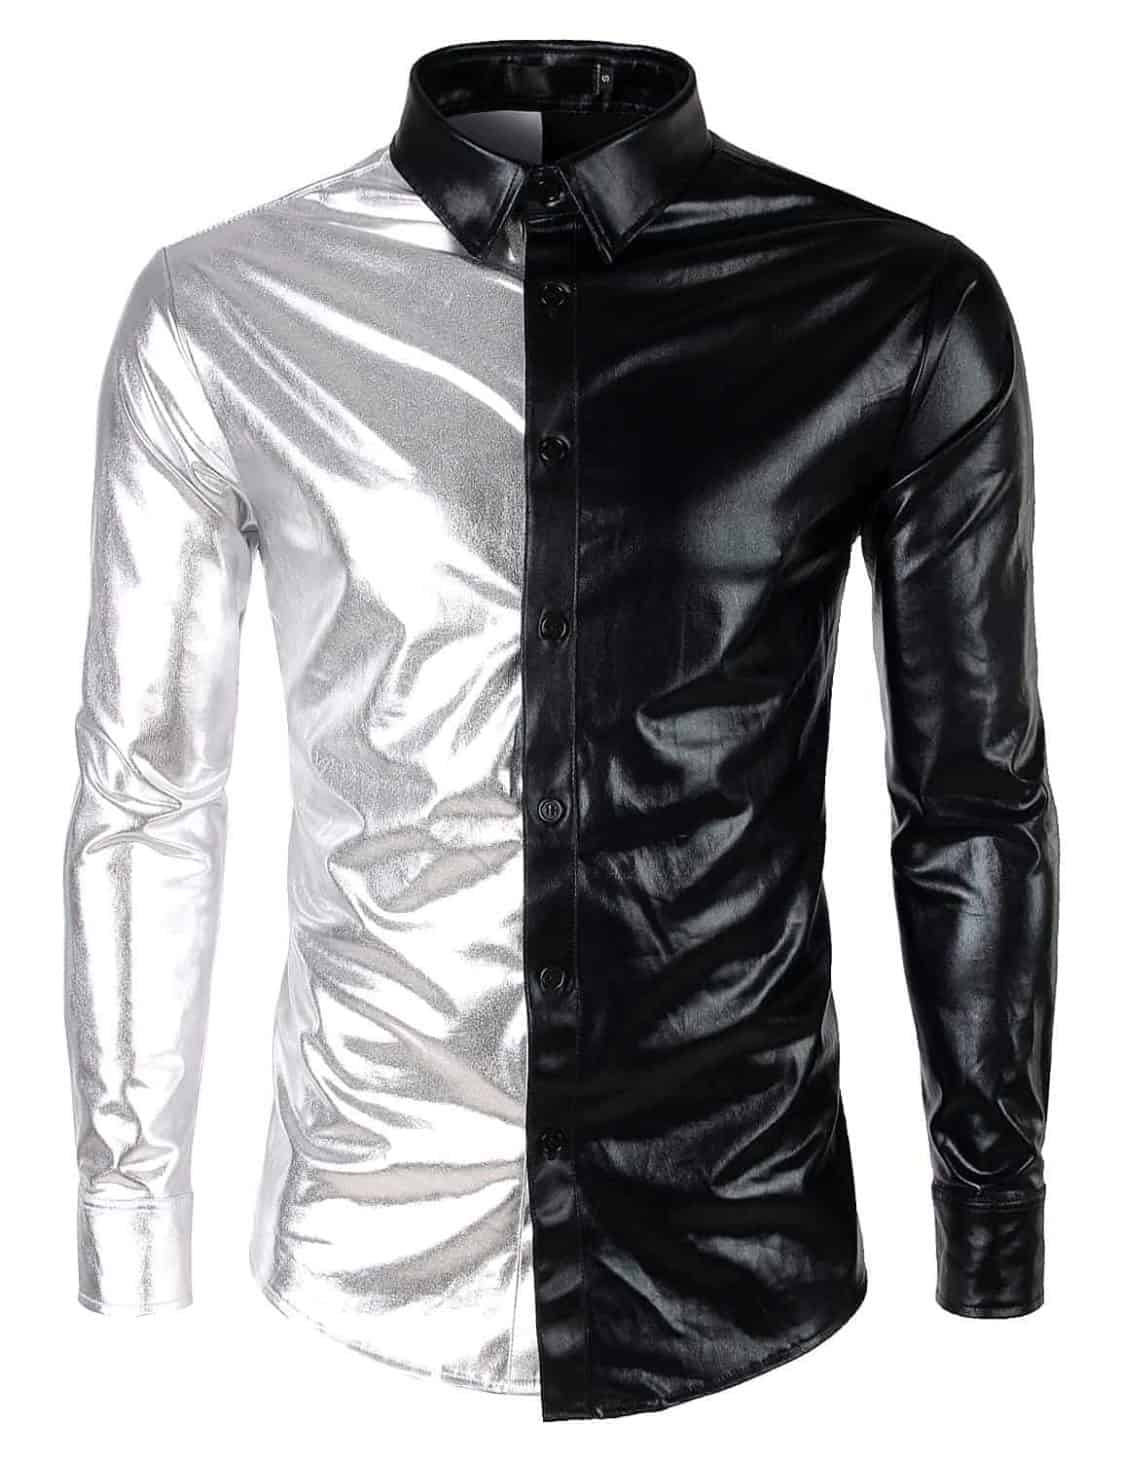 Half Silver Half Black Shirt - Swag Vibe